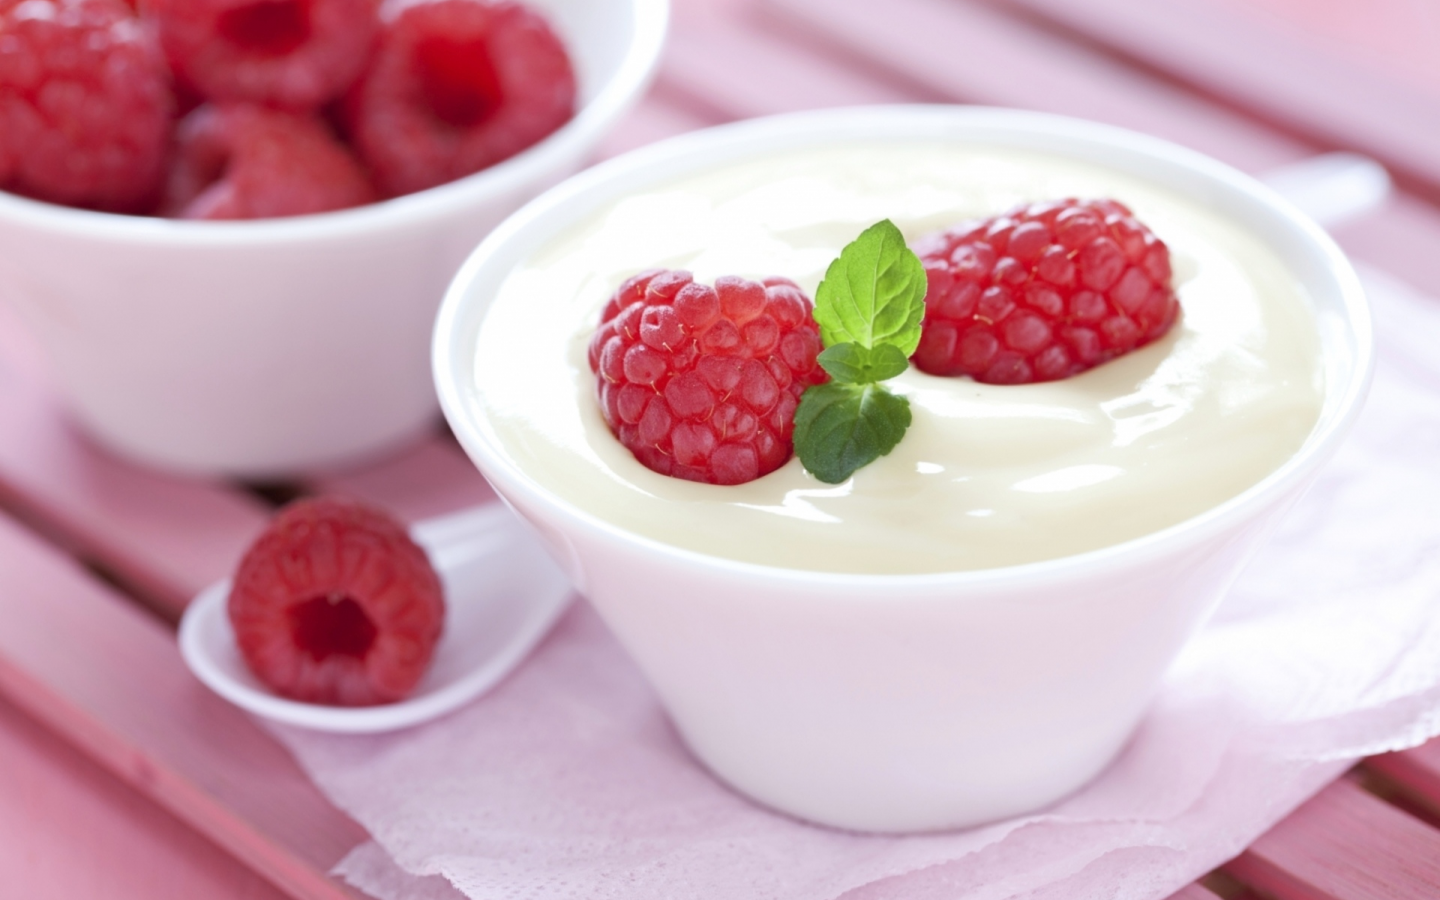 yogurt, cups, fruits, raspberries, крем, cream, йогурт, еда, milk, dessert